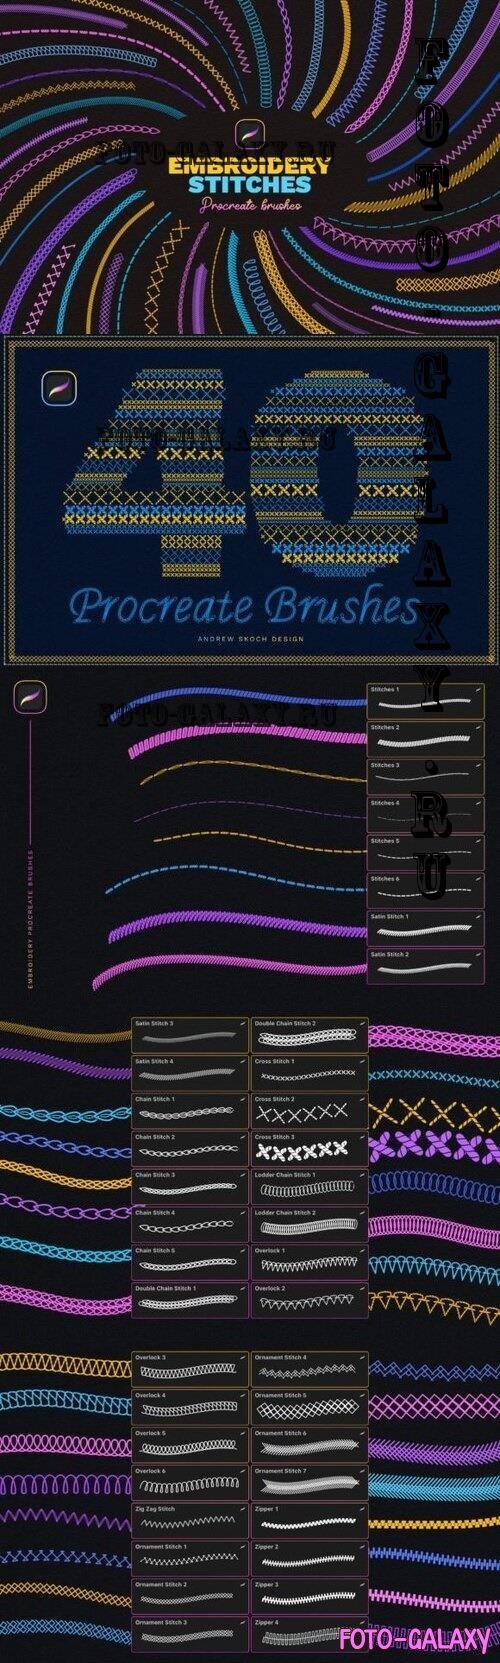 Embroidery Stitches Procreate Brush - 10265115